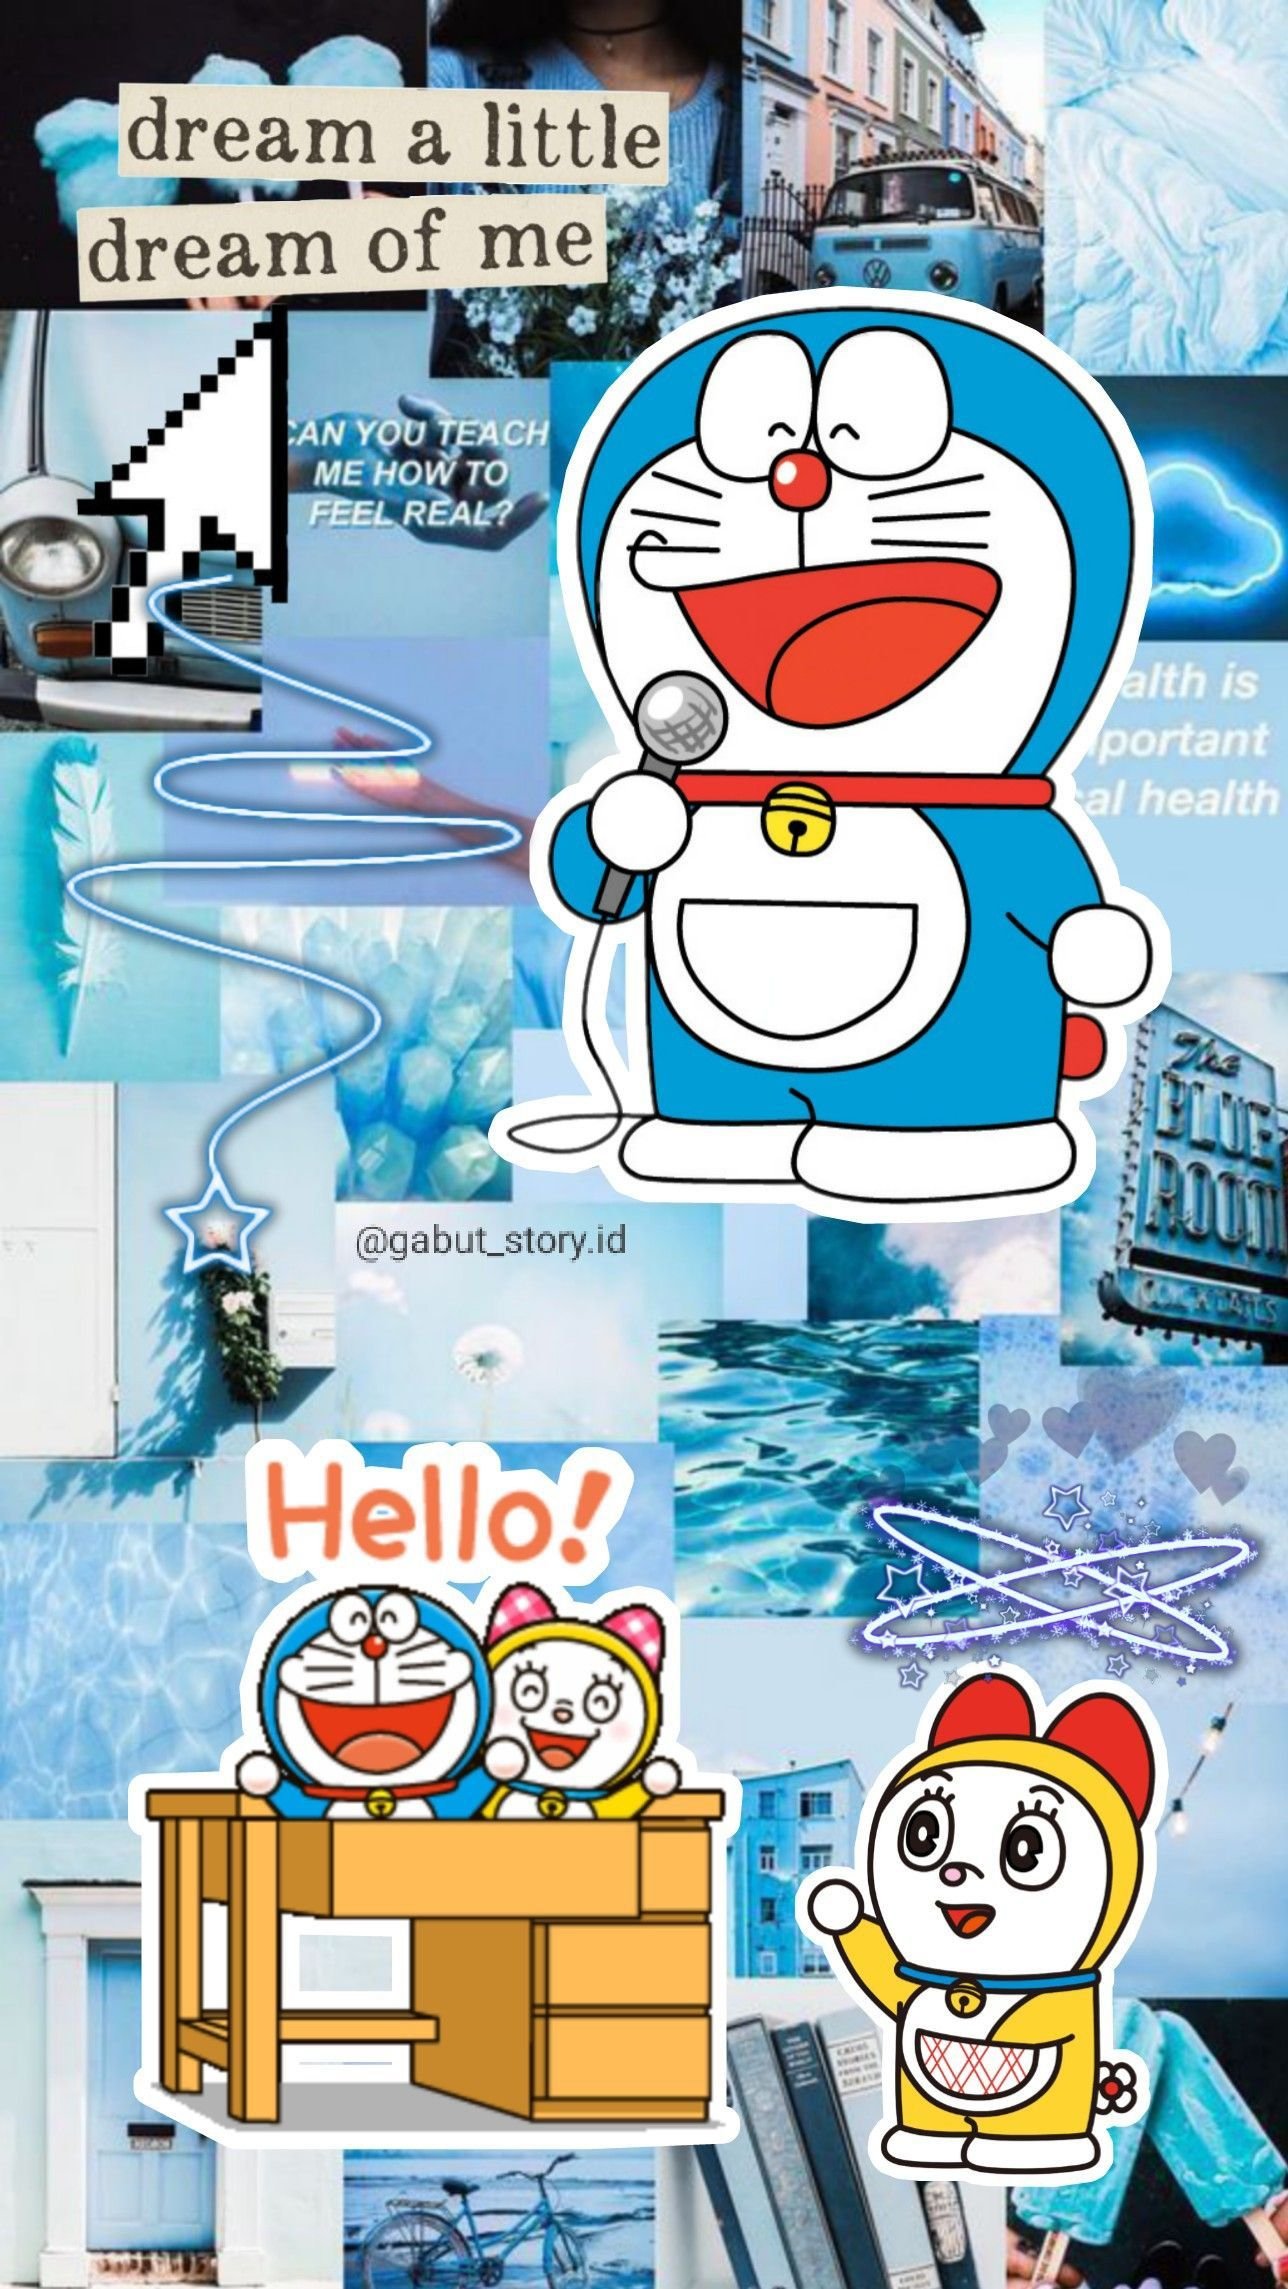 Doraemon Aesthetic